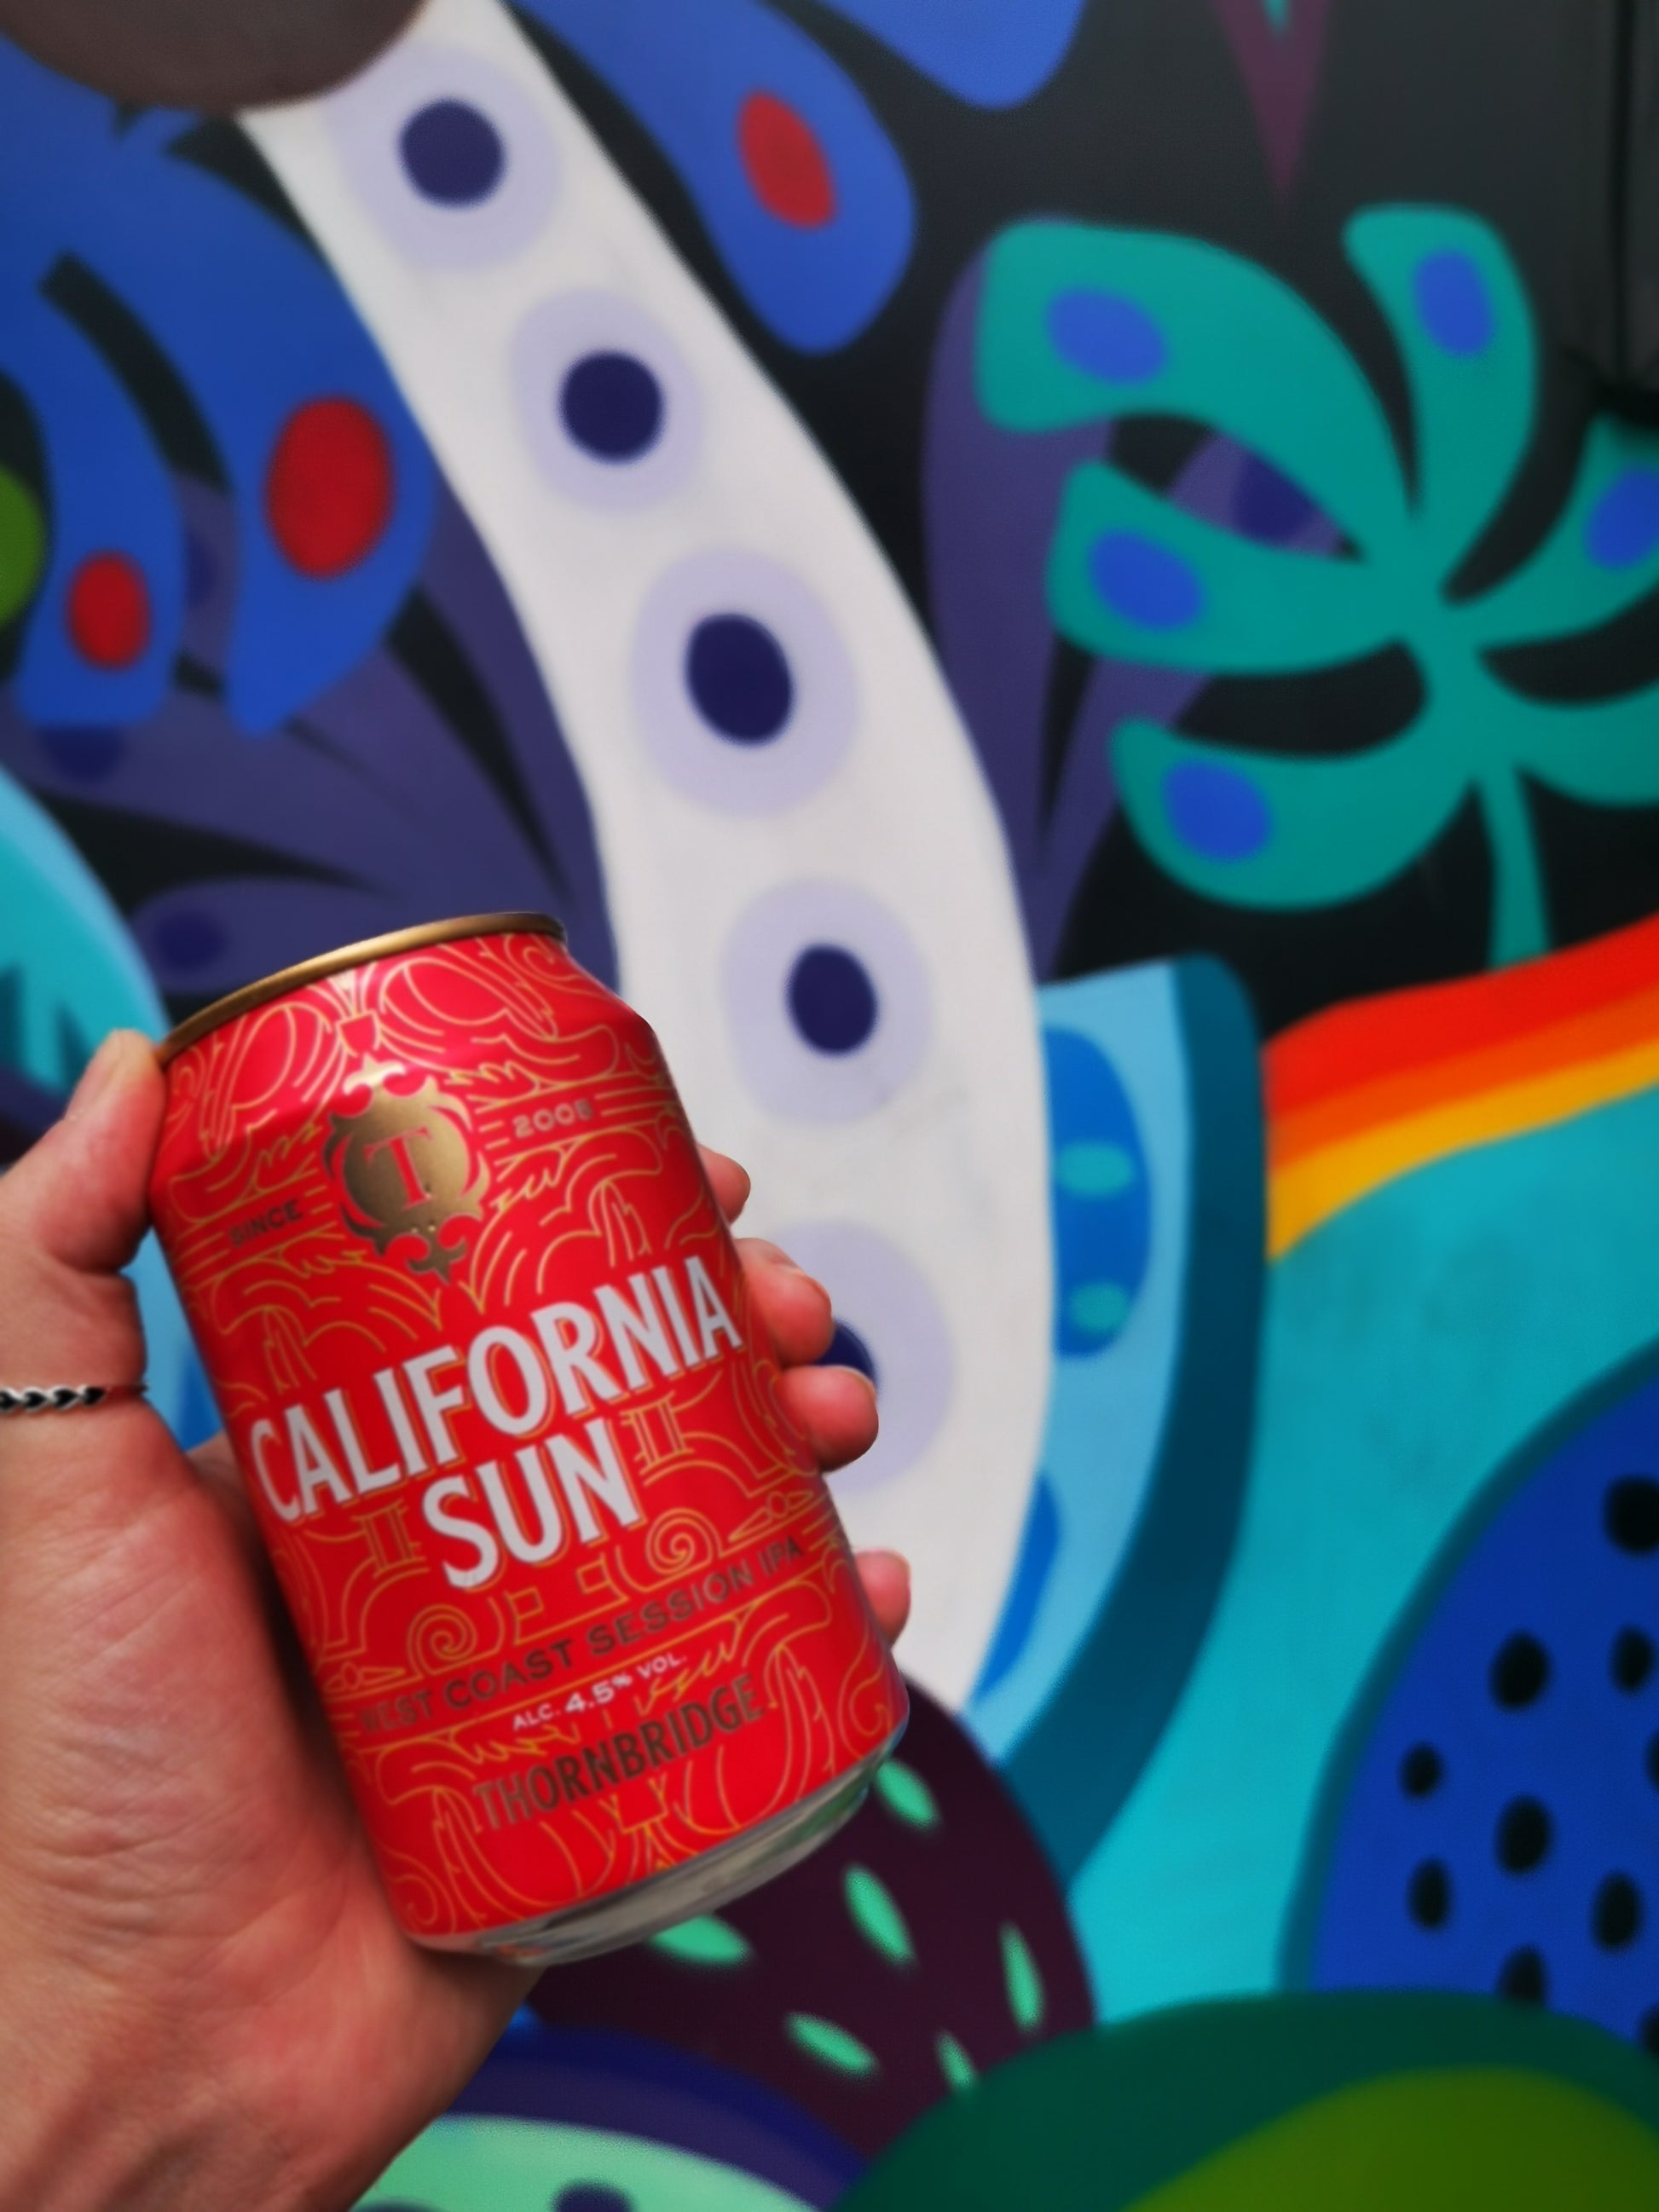 California Sun, 4.5% West Coast Session IPA Beer - Single Can Thornbridge